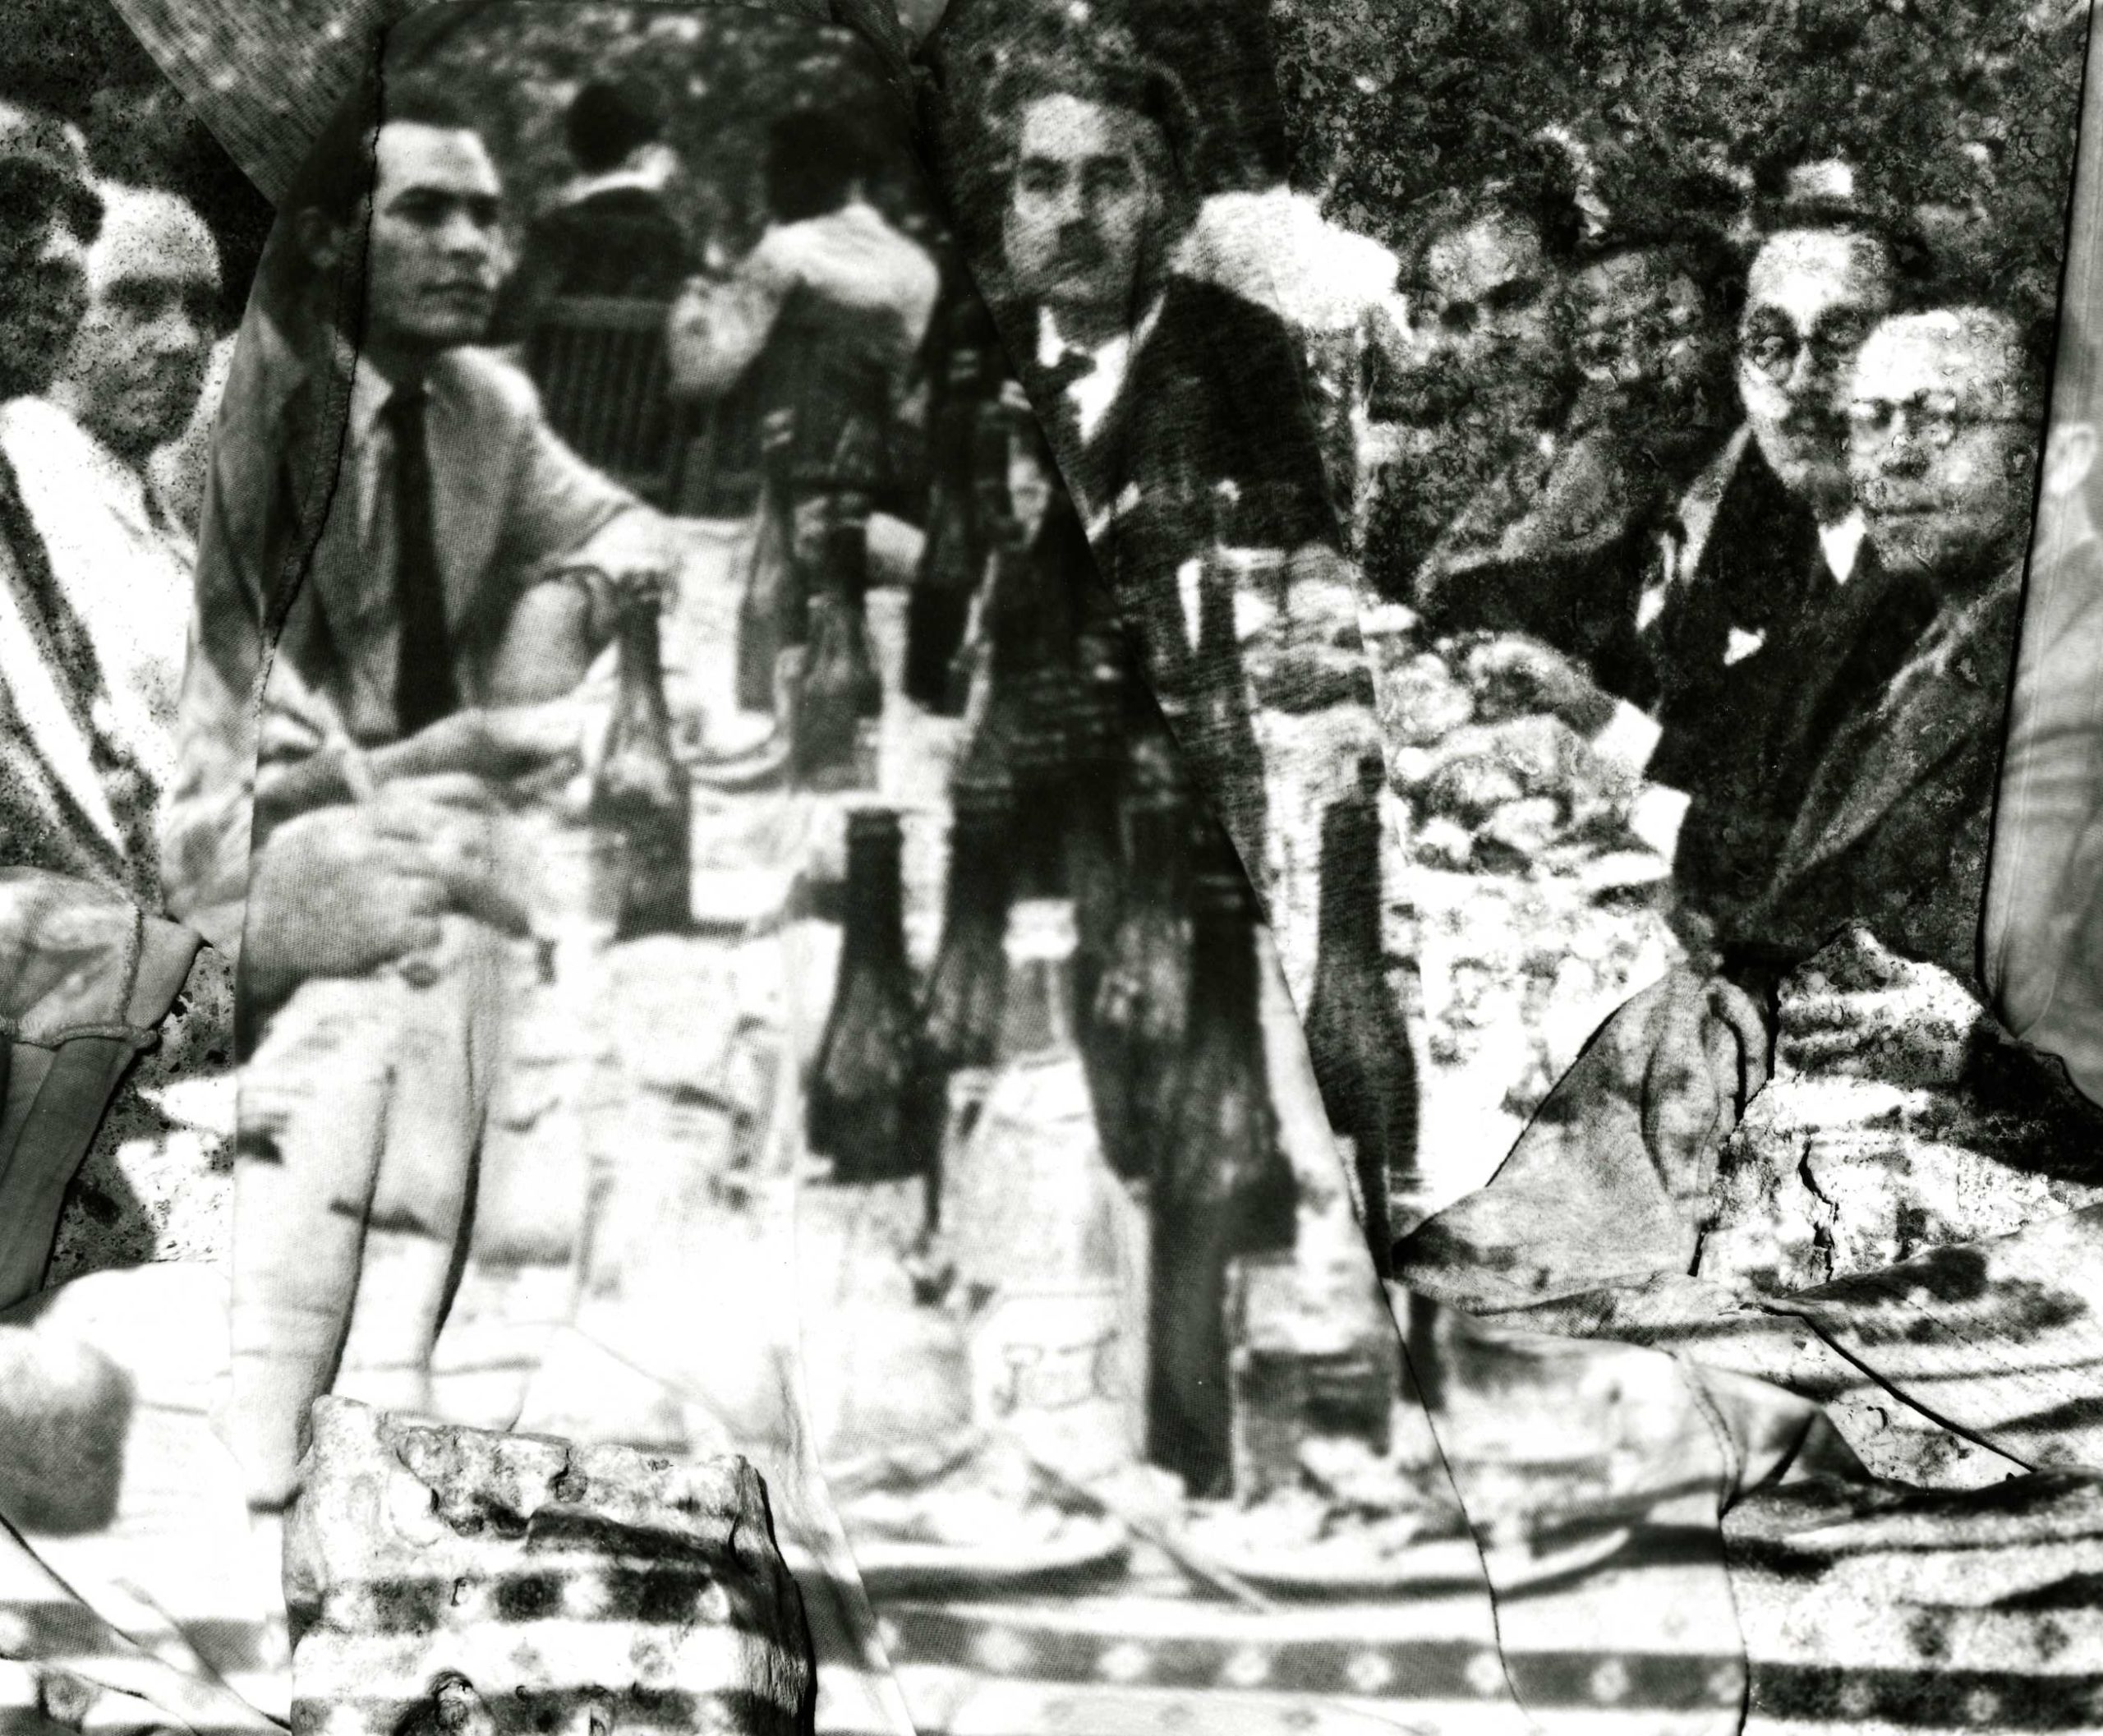 Lunch-Trial in Absence / Almuerzo-Juicio en ausencia(Havana outskirts, 1940